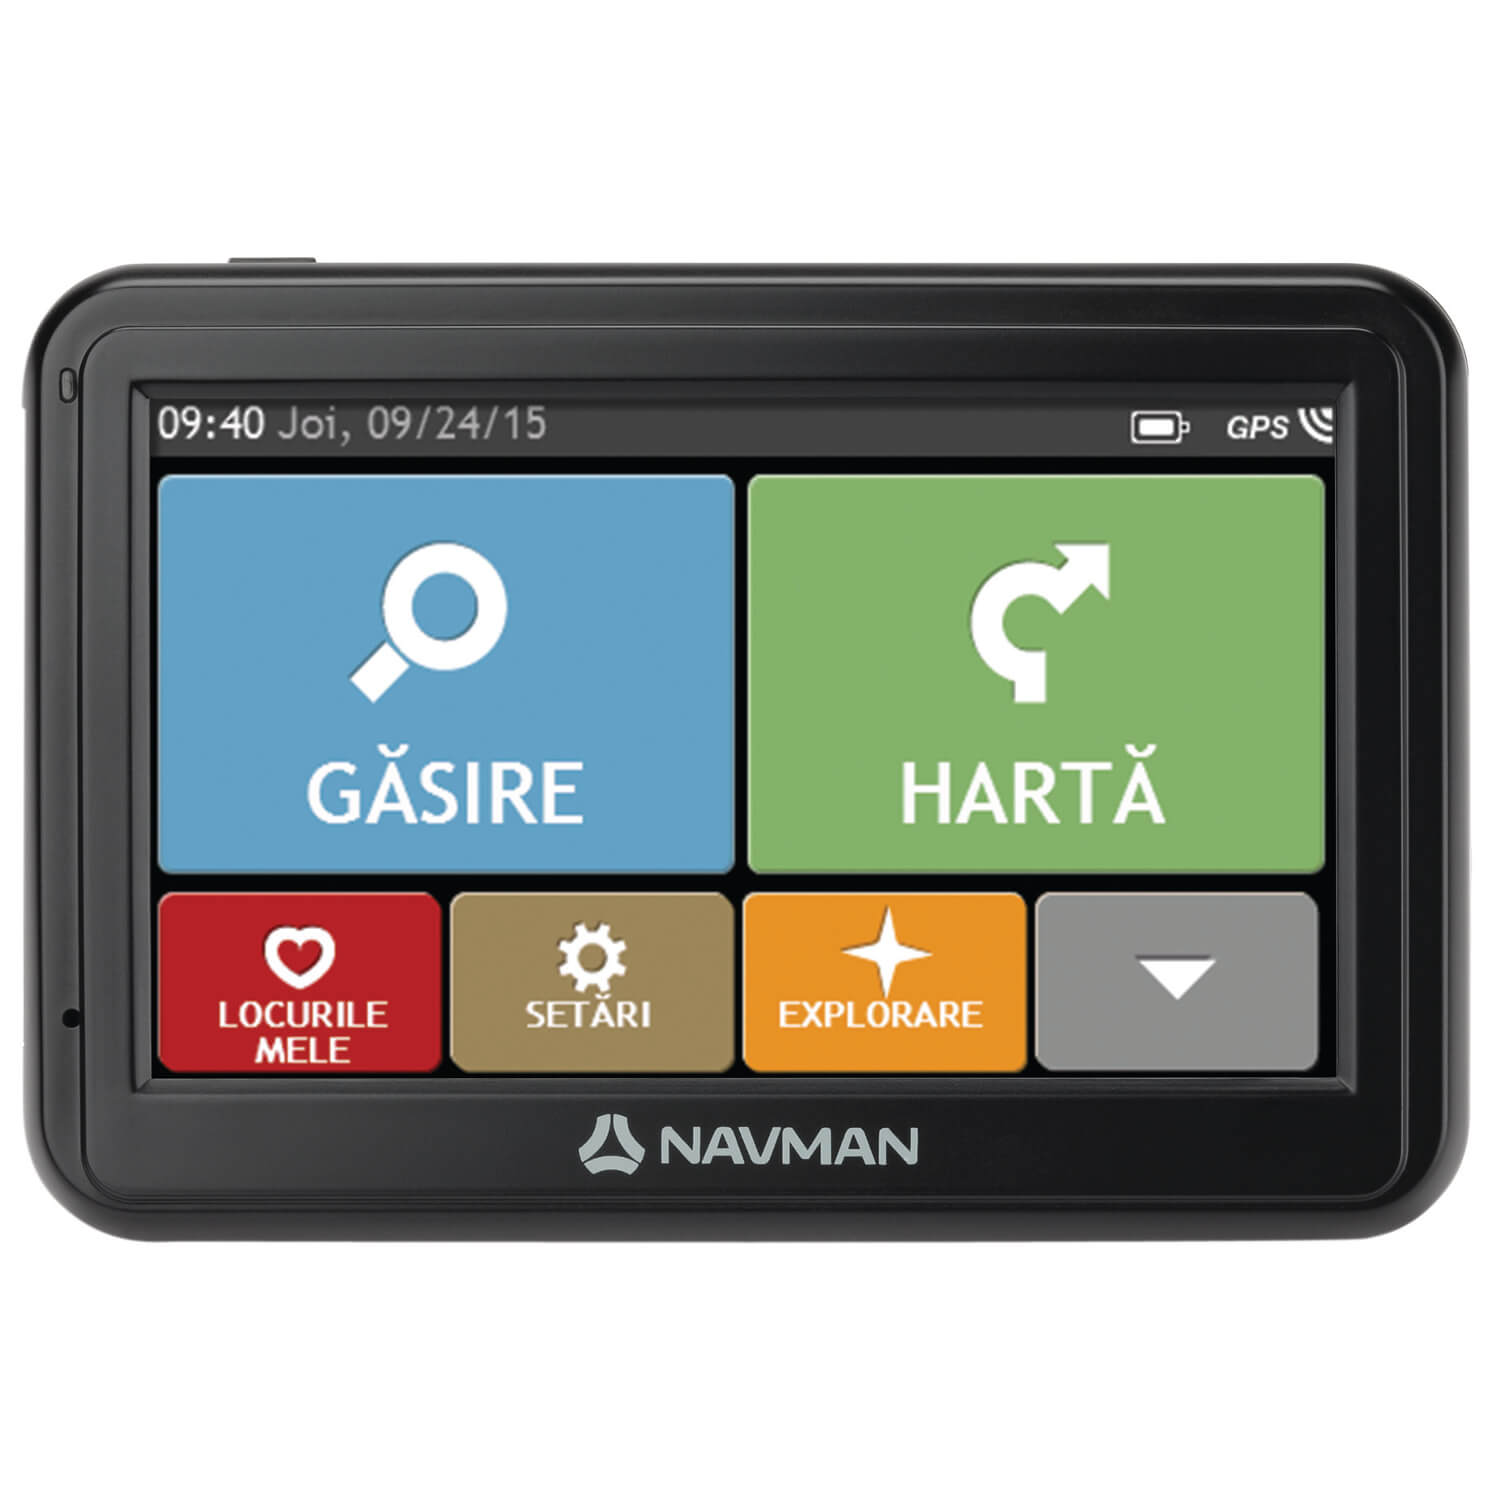  Navigatie GPS Navman 4000 LM, Full Europe + Update gratuit al hartilor pe viata 